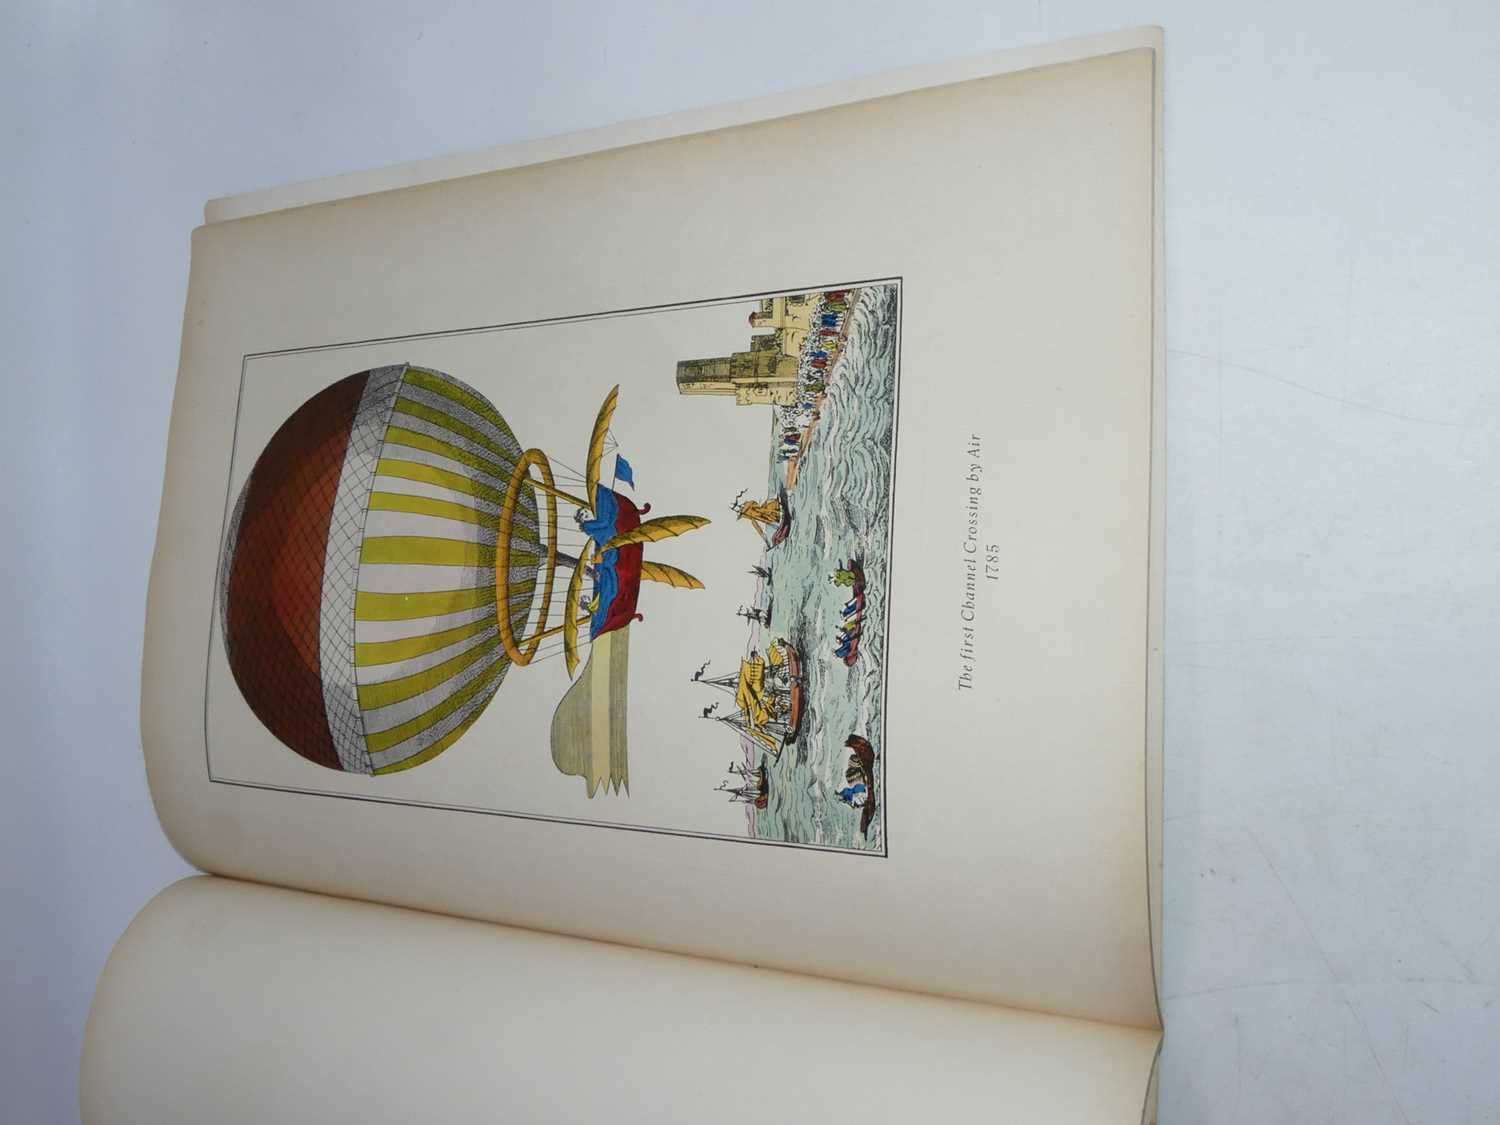 C H Gibbs-Smith, Balloons, Ariel Press 1956, one volume - Image 2 of 2